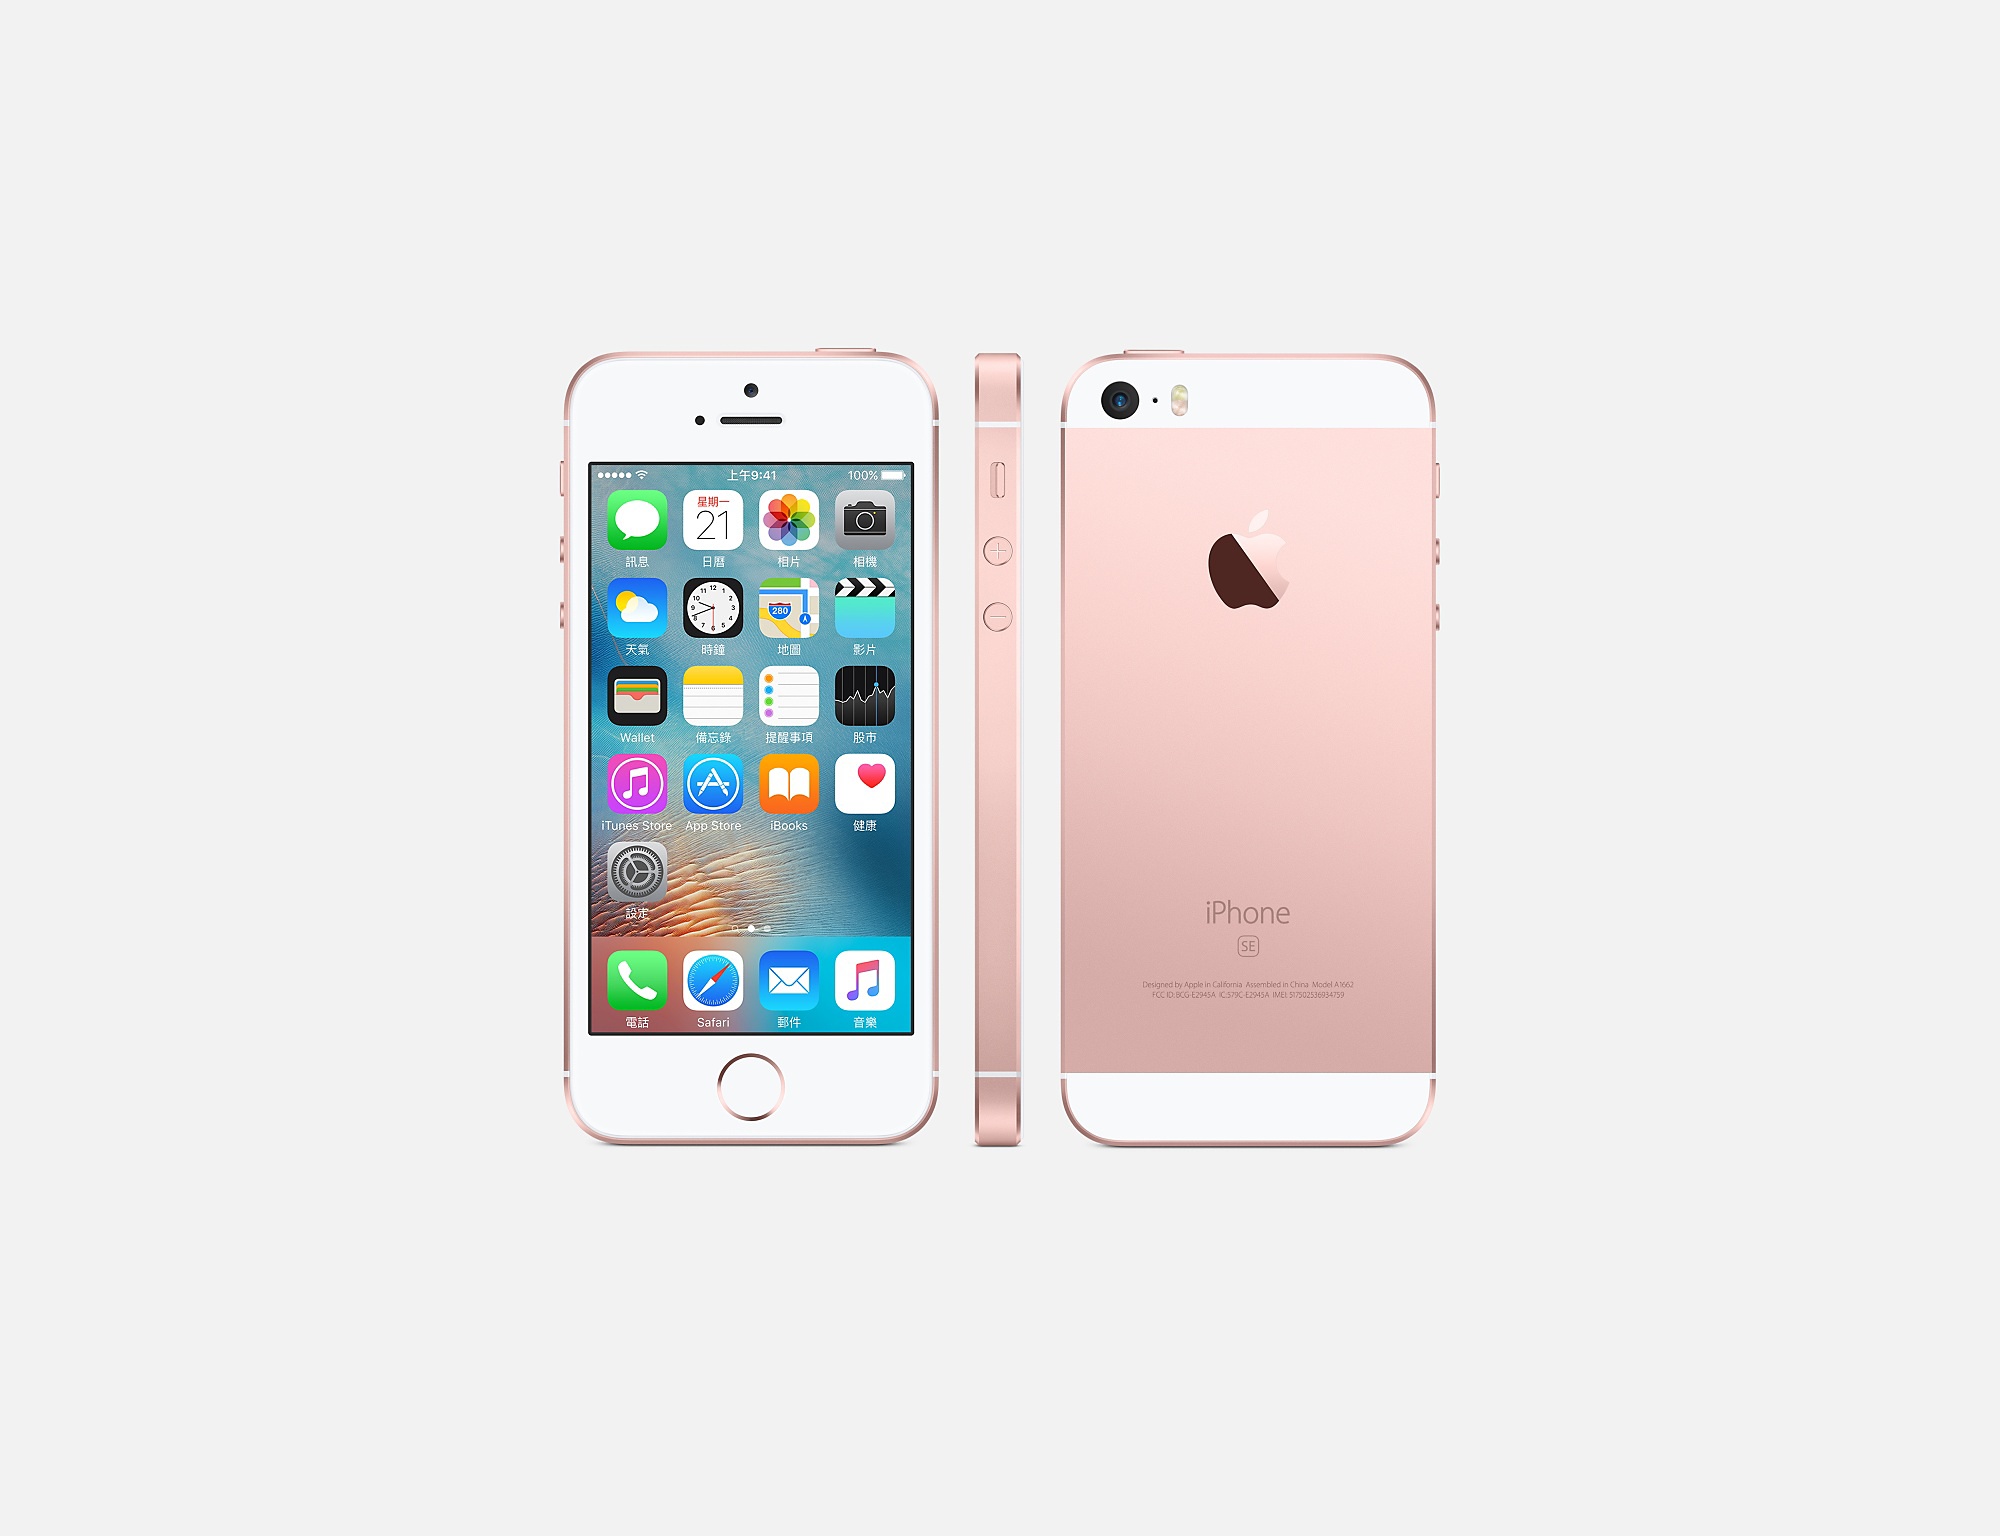 Apple iPhone SE 16GB價格、規格及用家意見 - 香港格價網 Price.com.hk